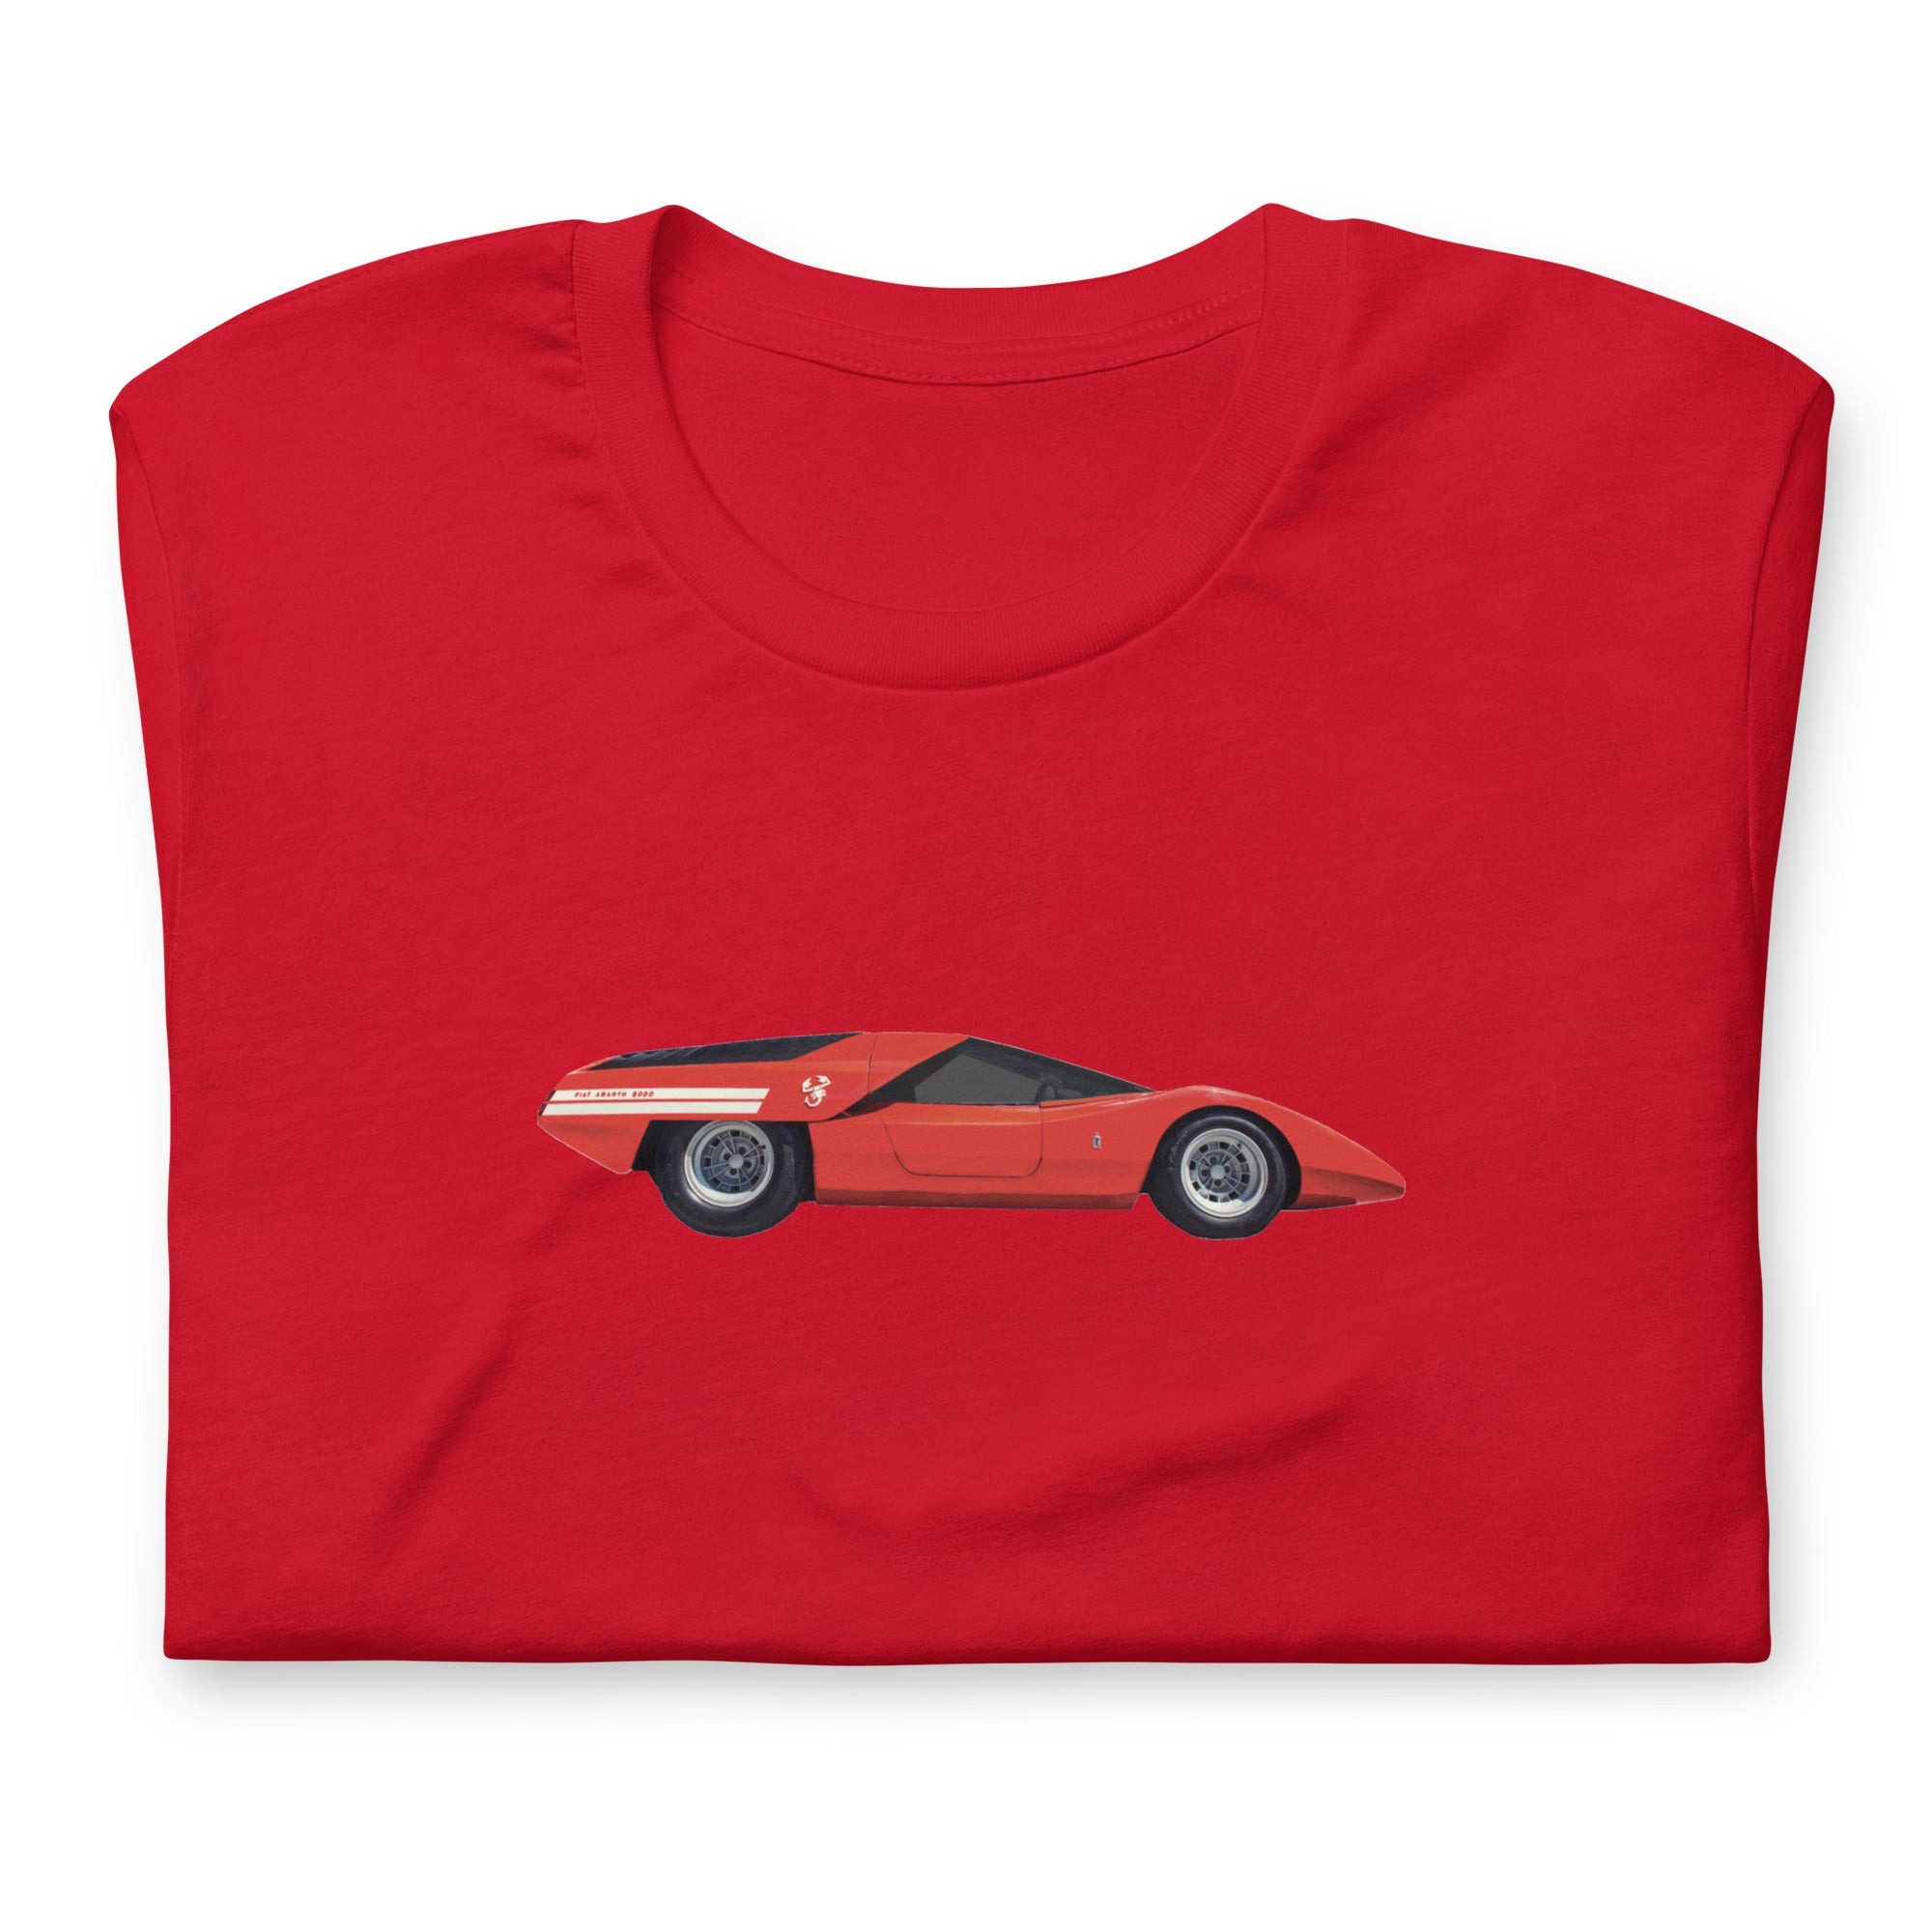 1969 Fiat Abarth 2000 Scorpione T shirt red folded